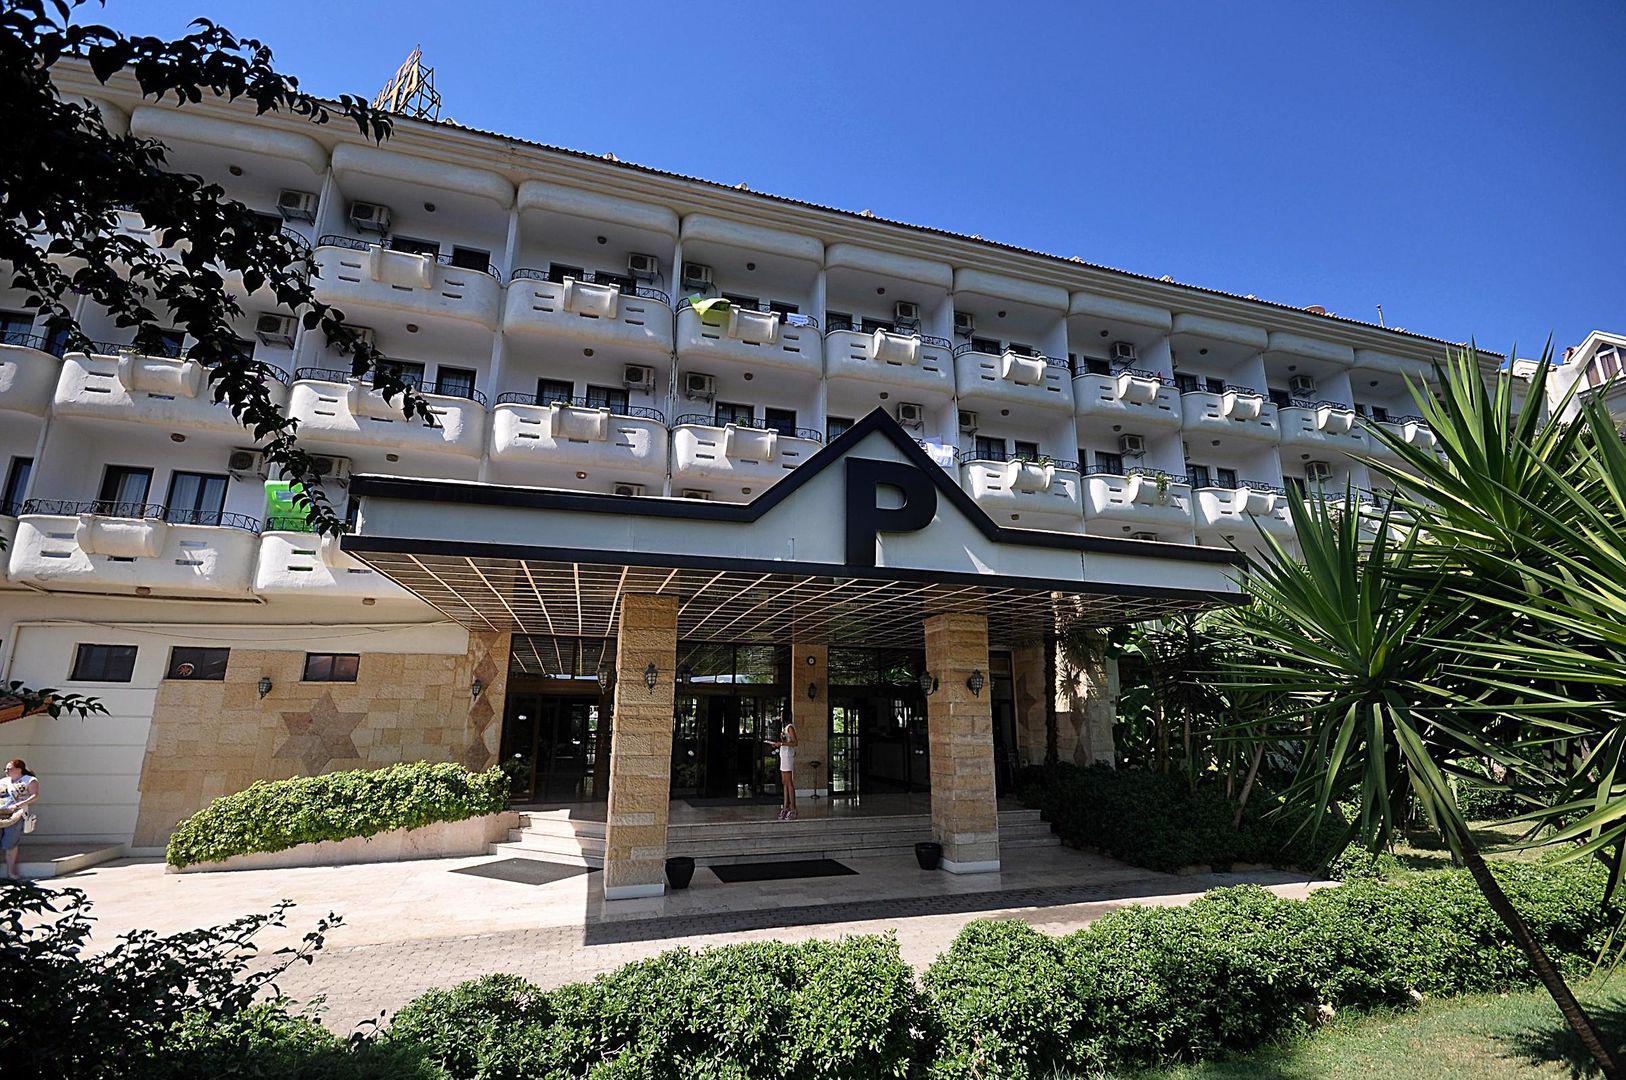 Pineta Clubhotel - Marmaris - Turkije